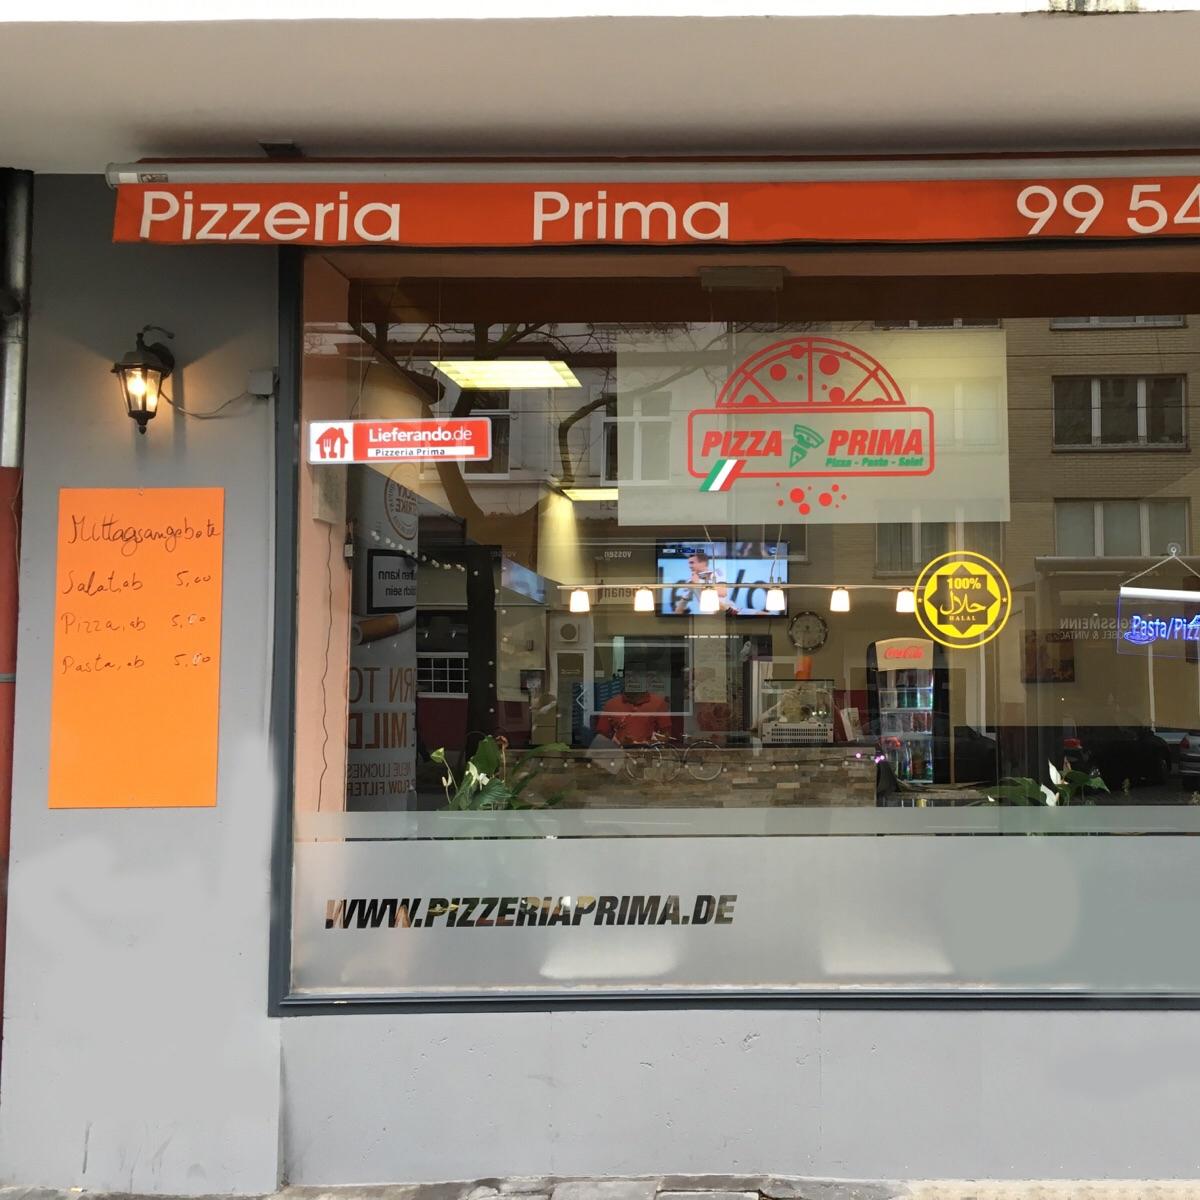 Restaurant "Pizzeria Prima" in Düsseldorf